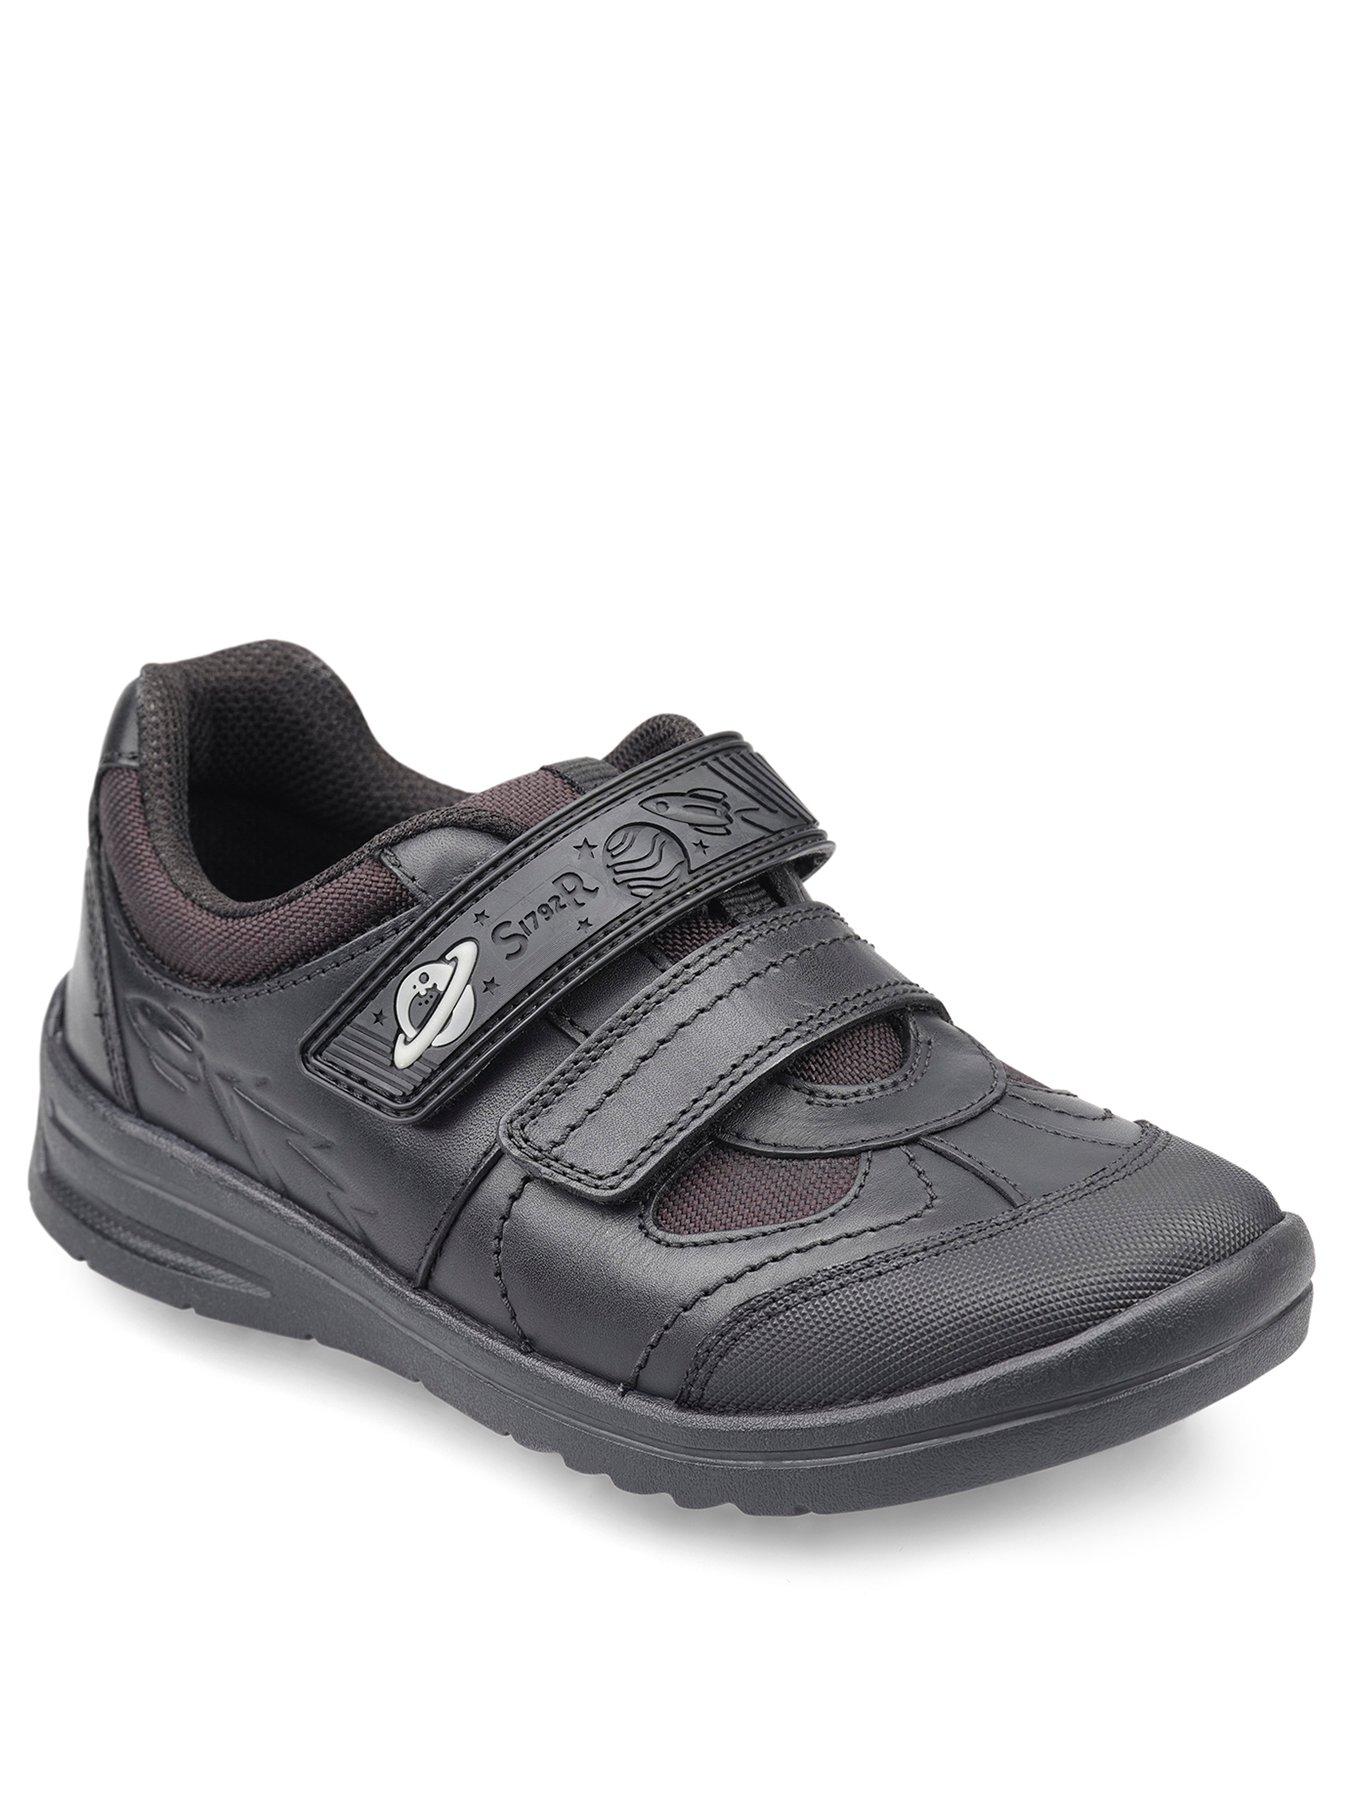 13.5 | School shoes | Shoes \u0026 boots 